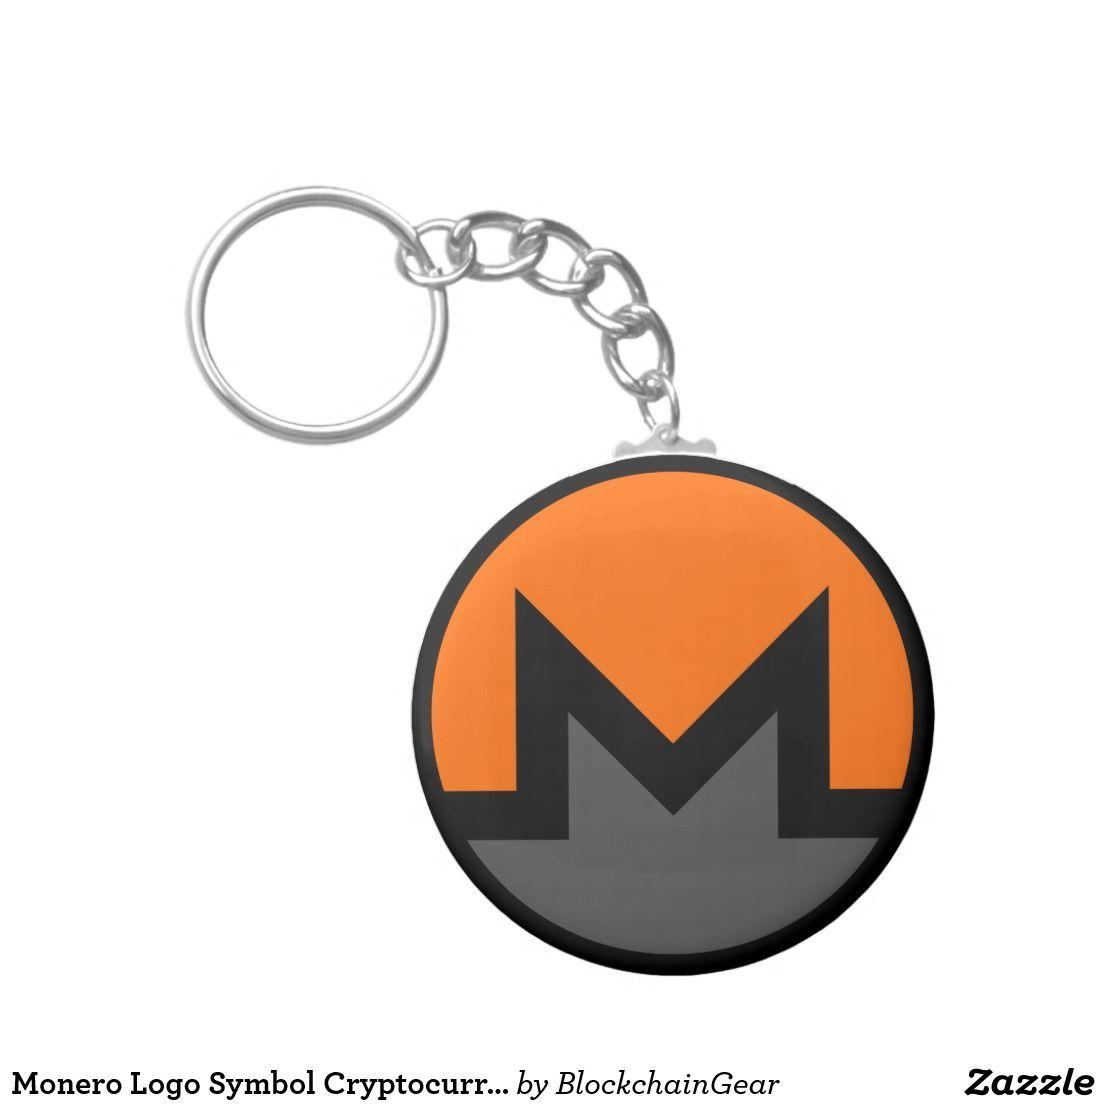 Monero Logo - Monero Logo Symbol Cryptocurrency Coin Keychain | Blockchain Gear ...